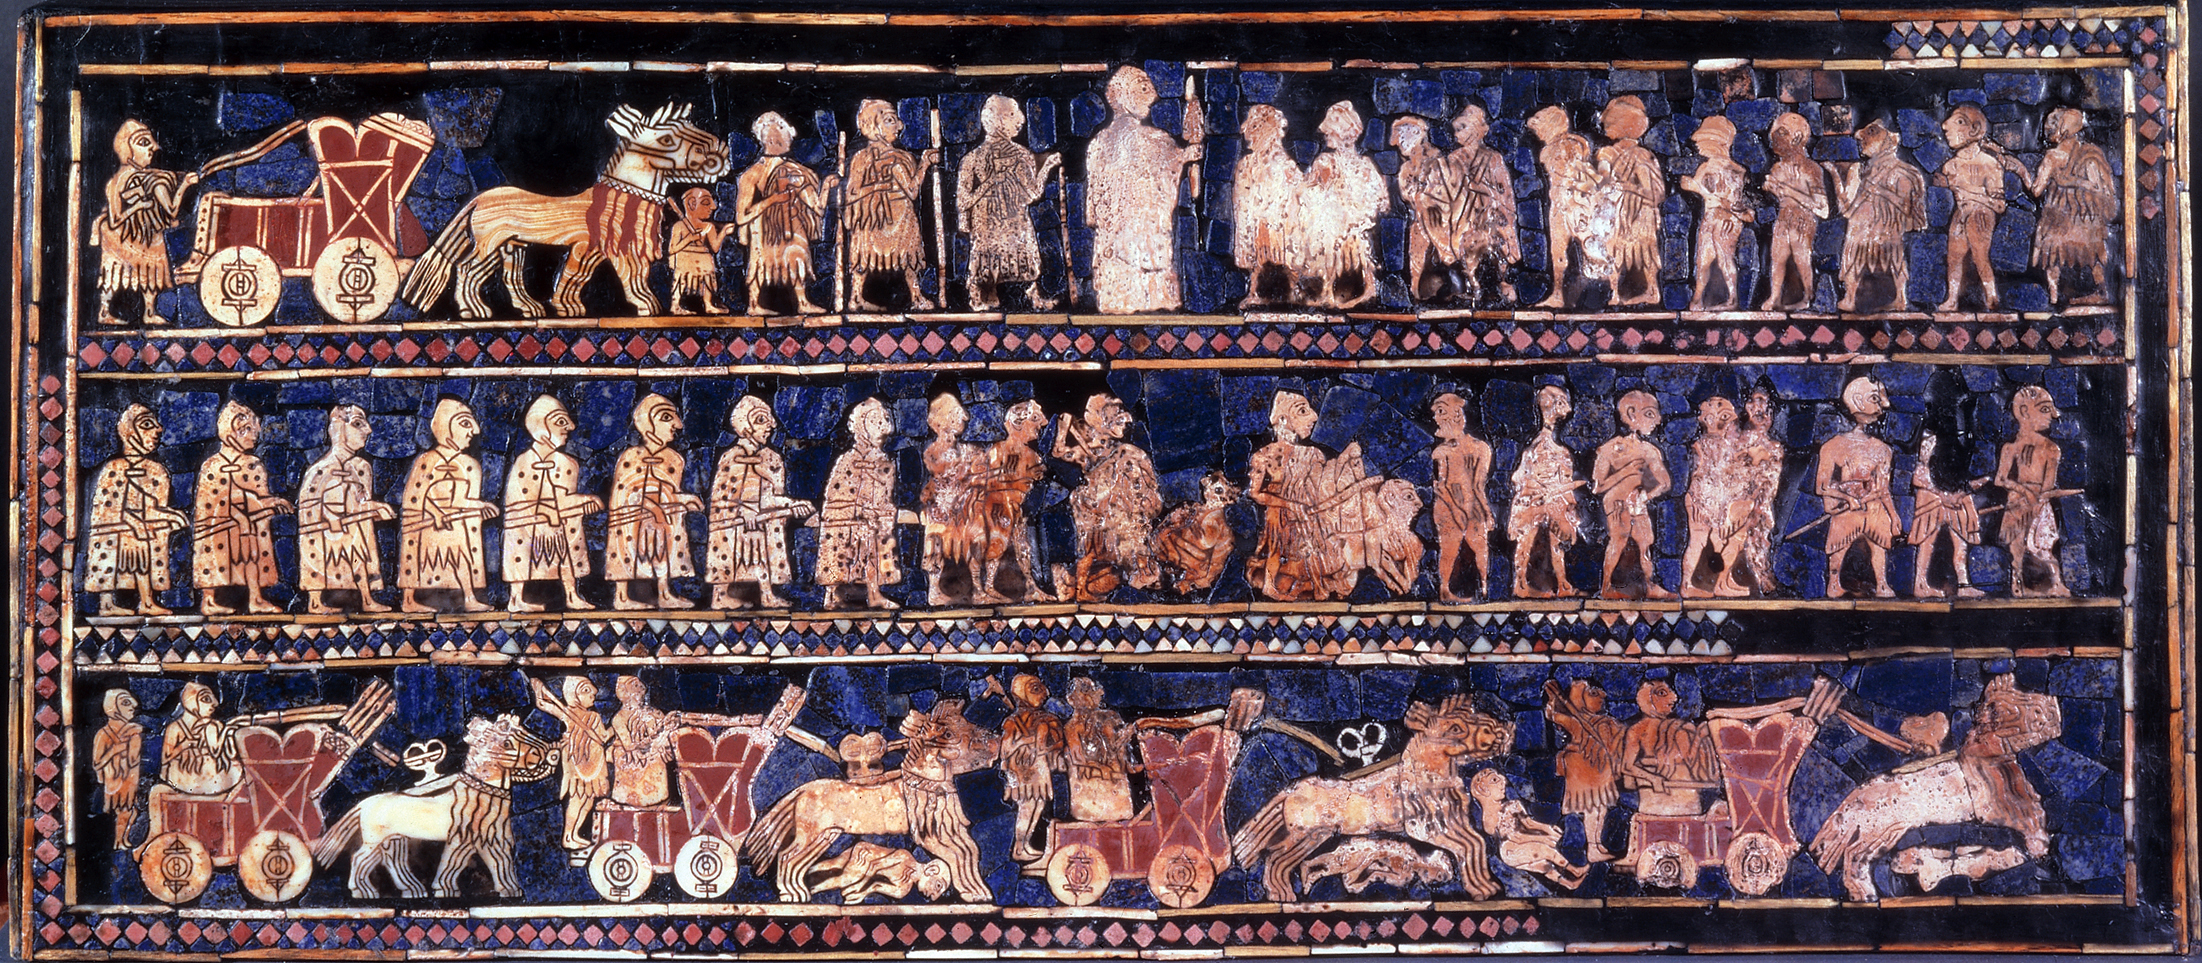 Estandarte de Ur, Sumeria (2600-2500 a.C.)